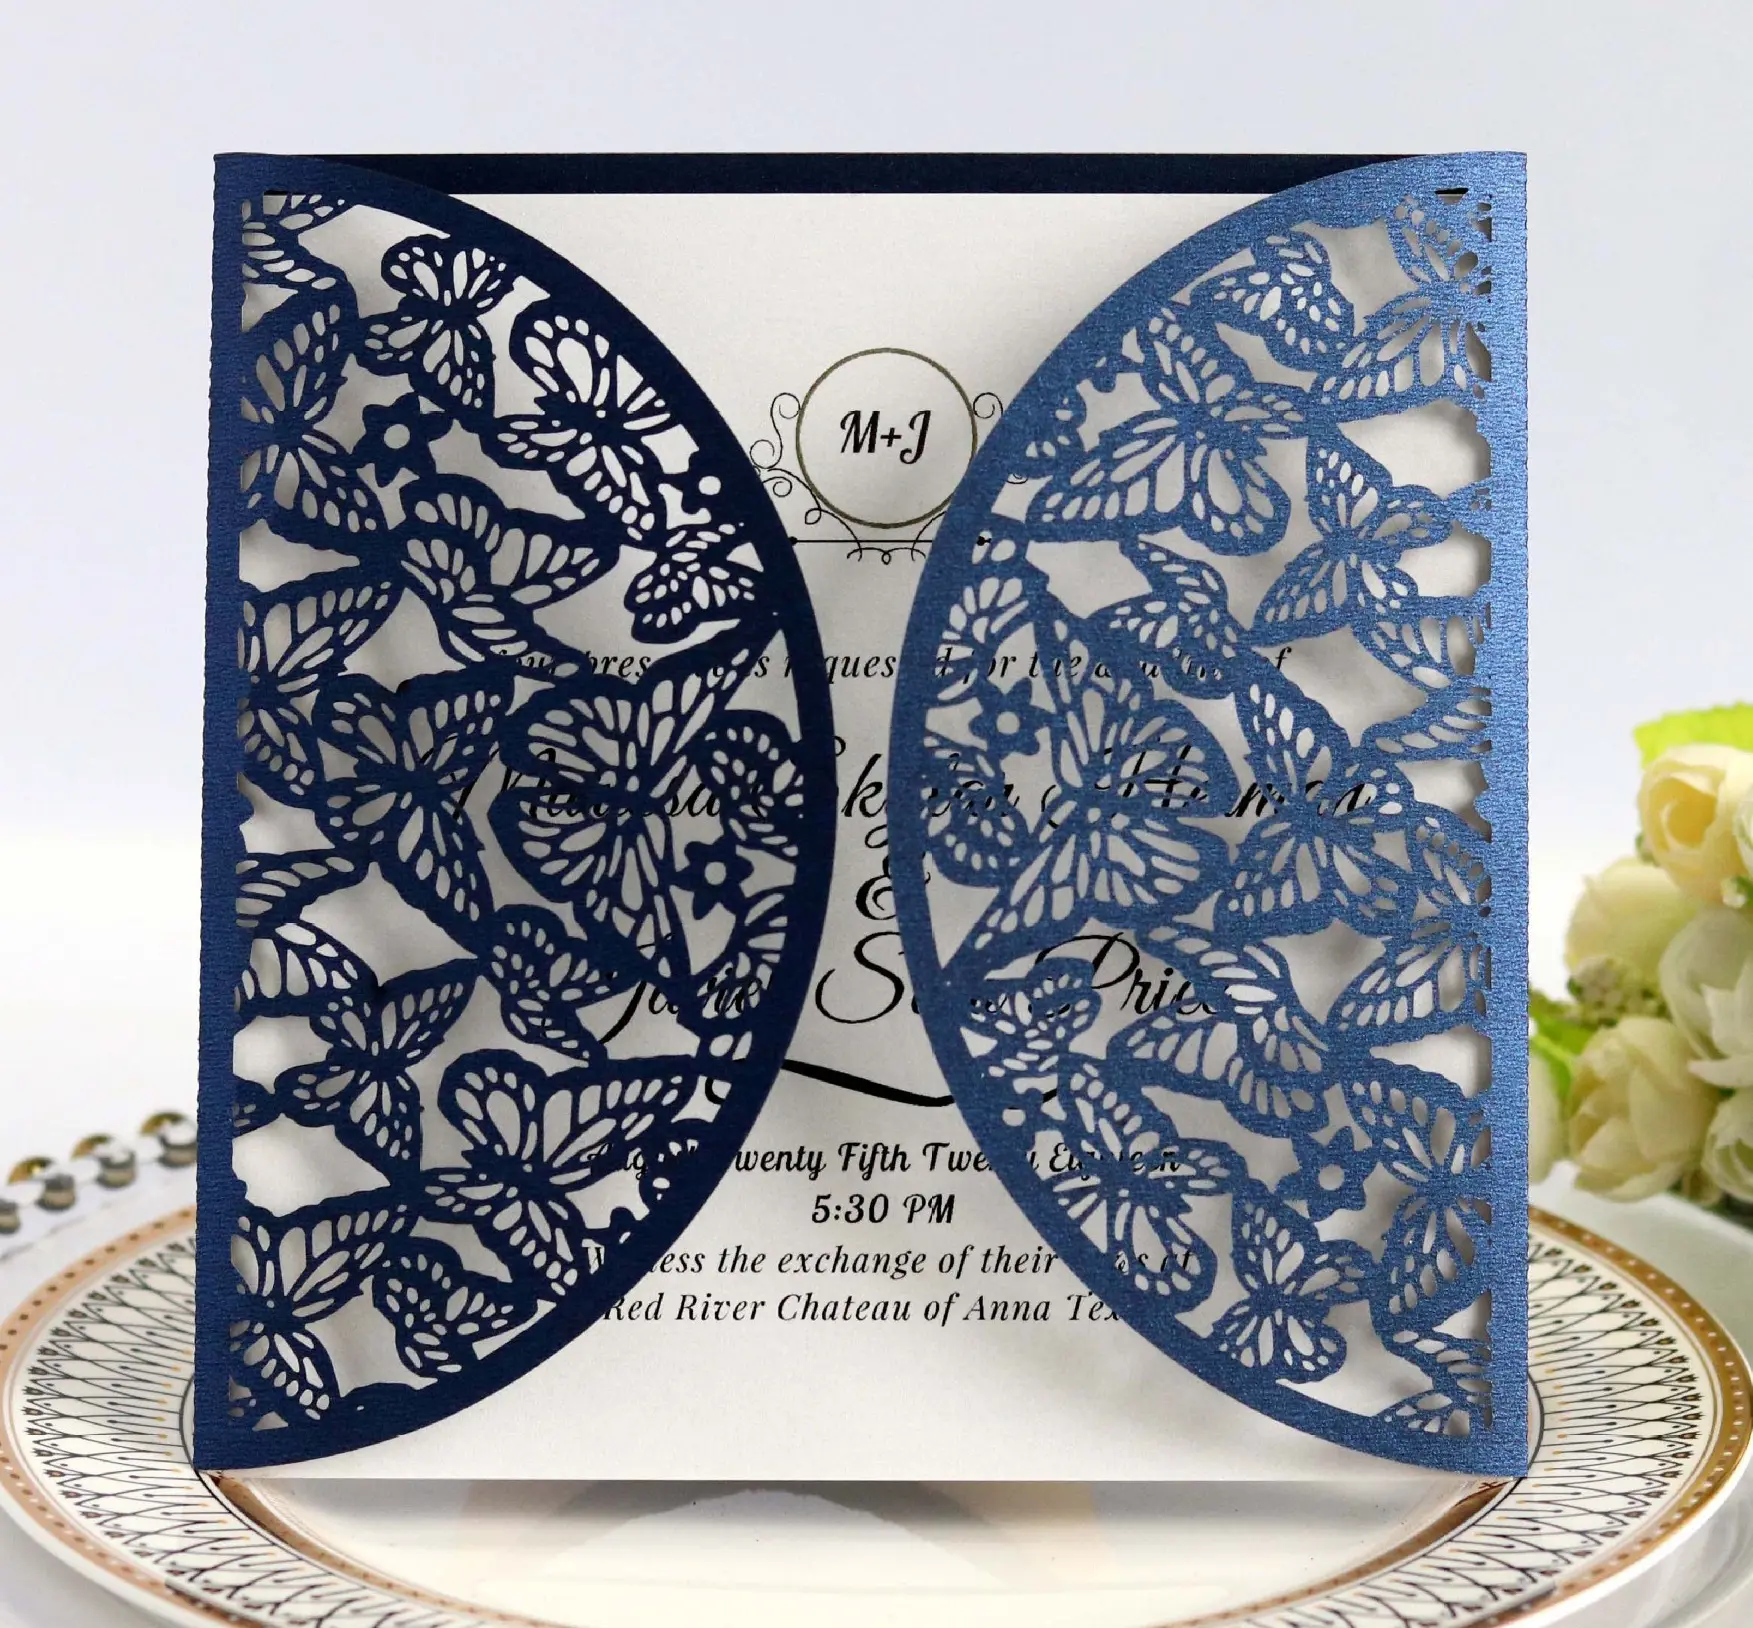 Laser hollowed-out holiday cards Wedding invitations engagement party invitations wedding invitations elegant